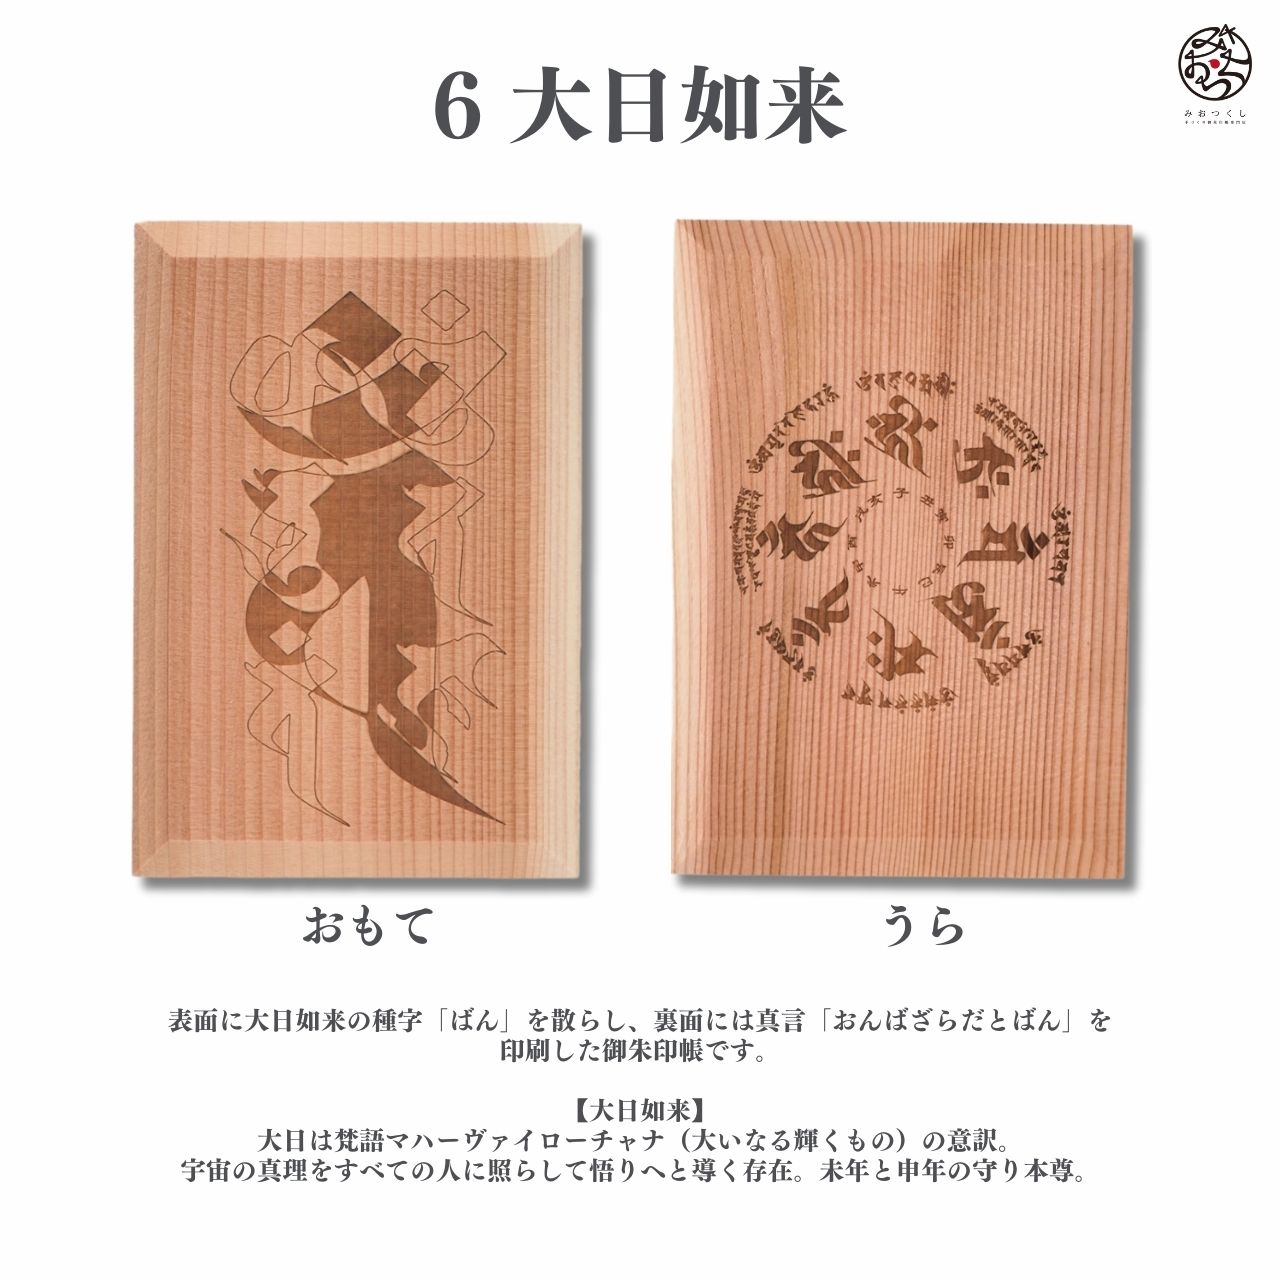 Goshuin book "wooden incense" Sanskrit characters: Dainichi Nyorai